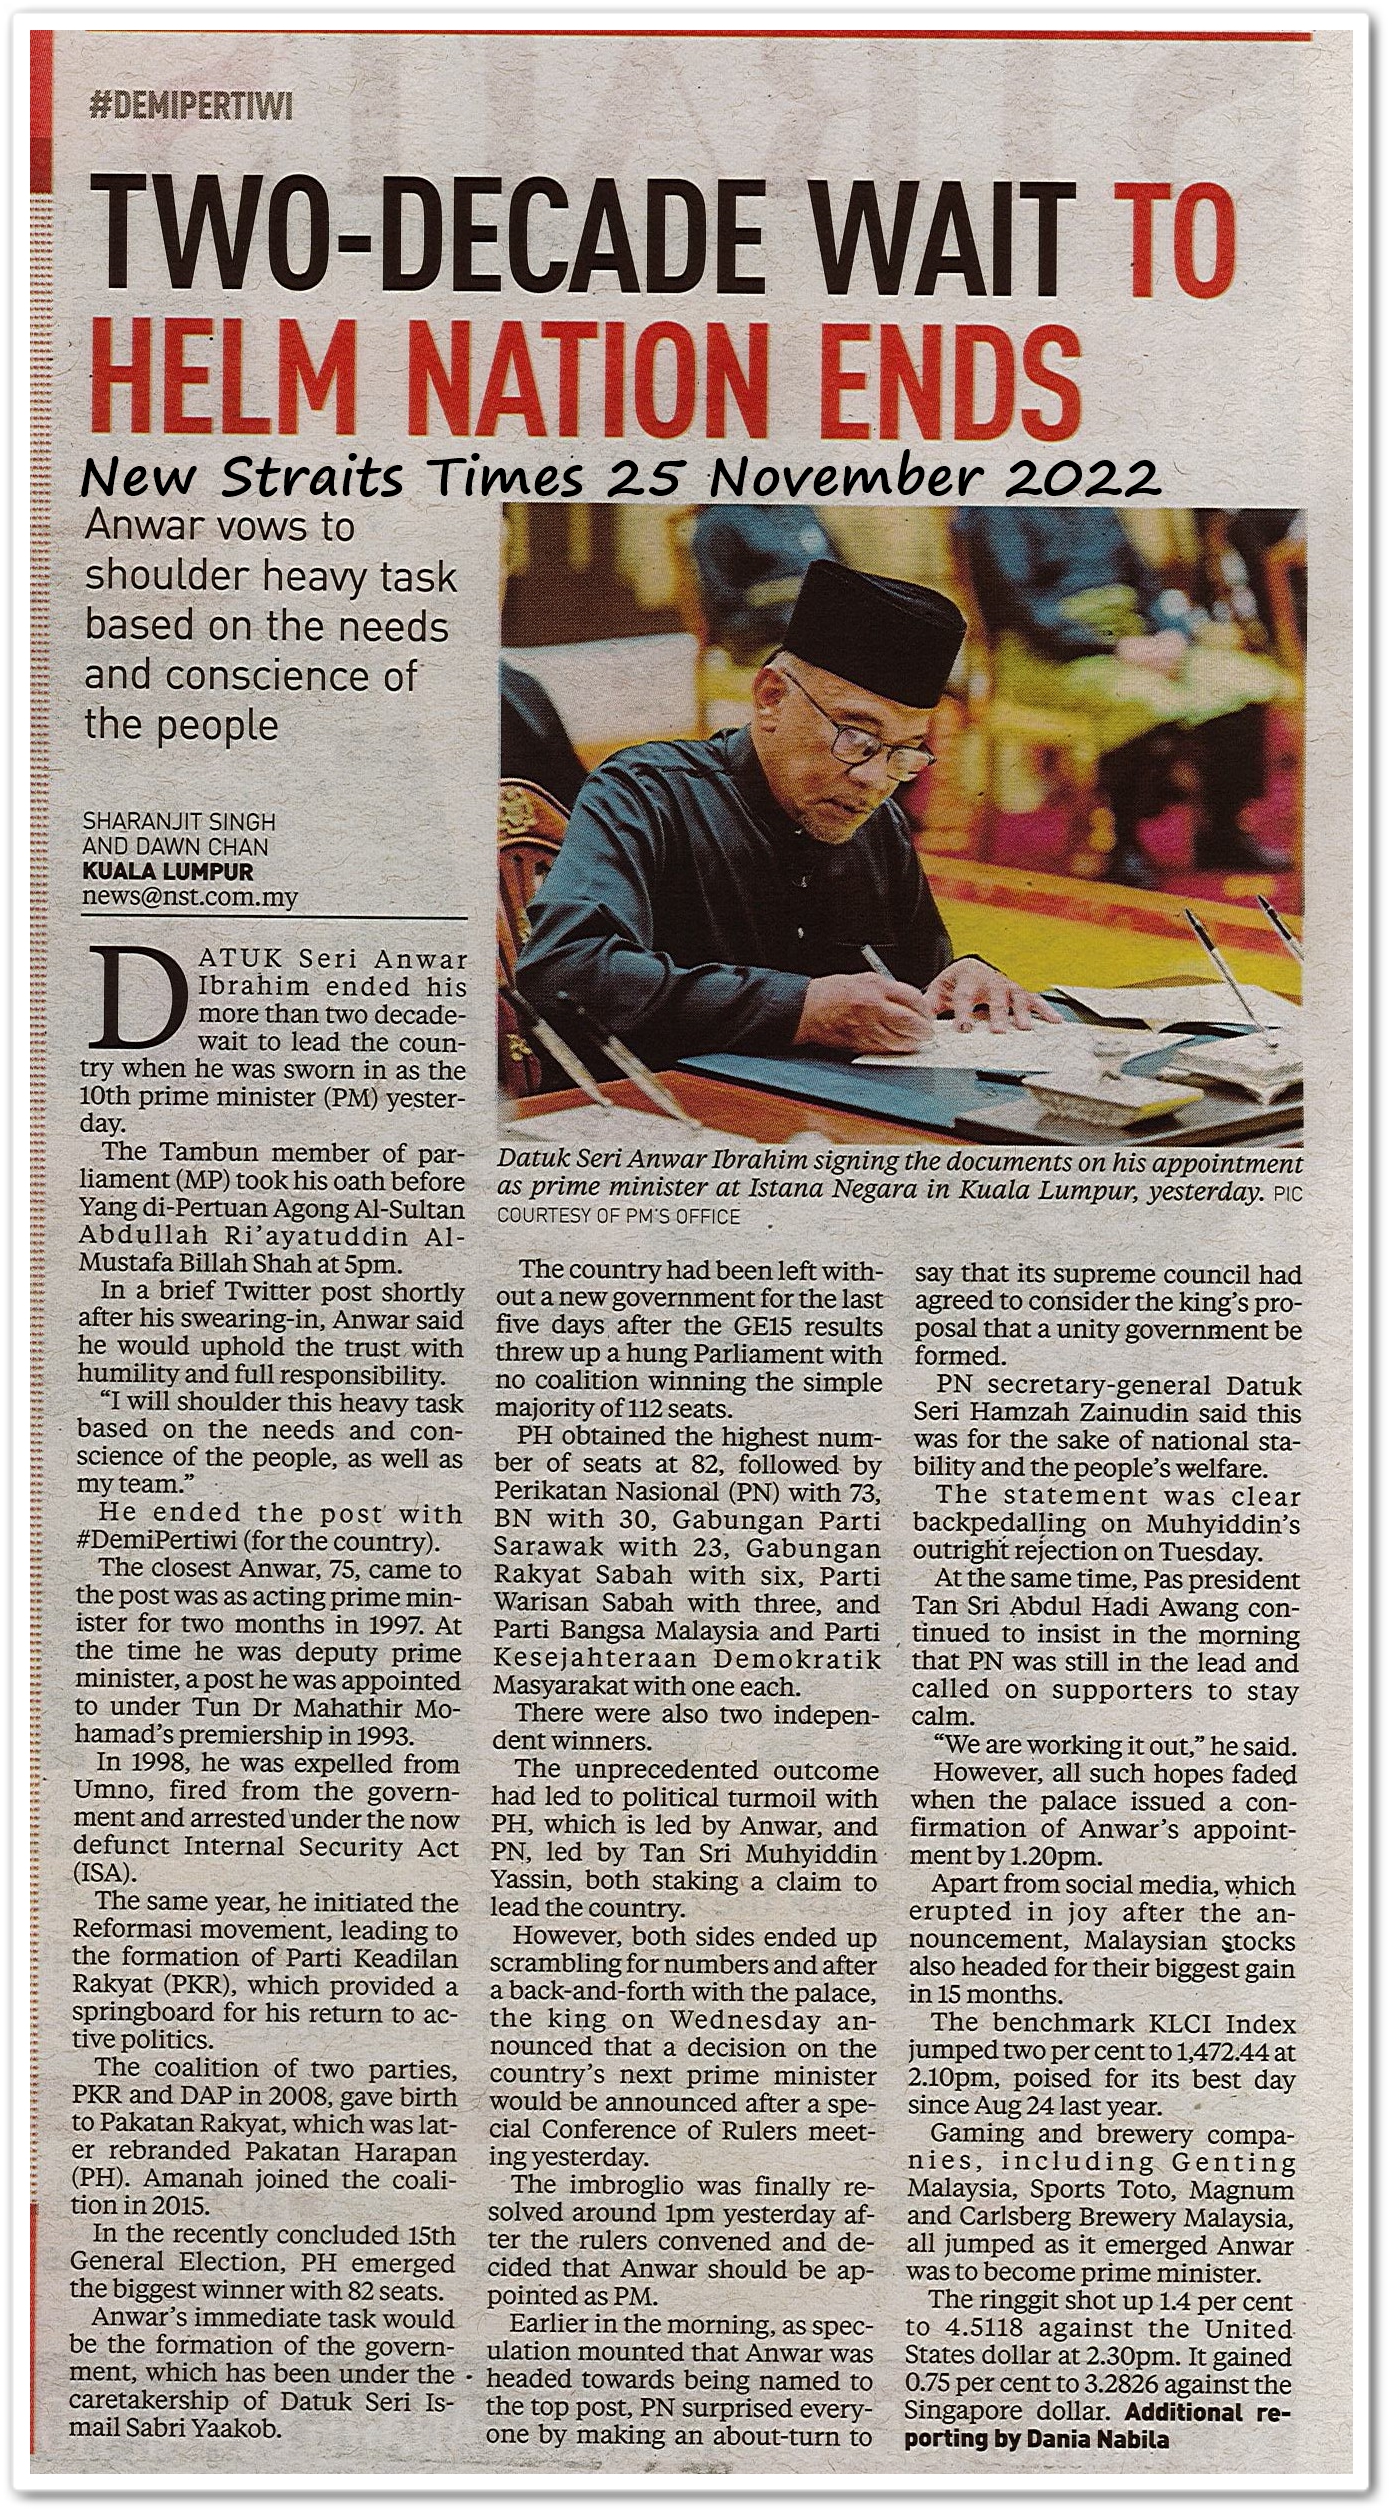 Two-decade wait to helm nation ends  - Keratan akhbar New Straits Times 25 November 2022